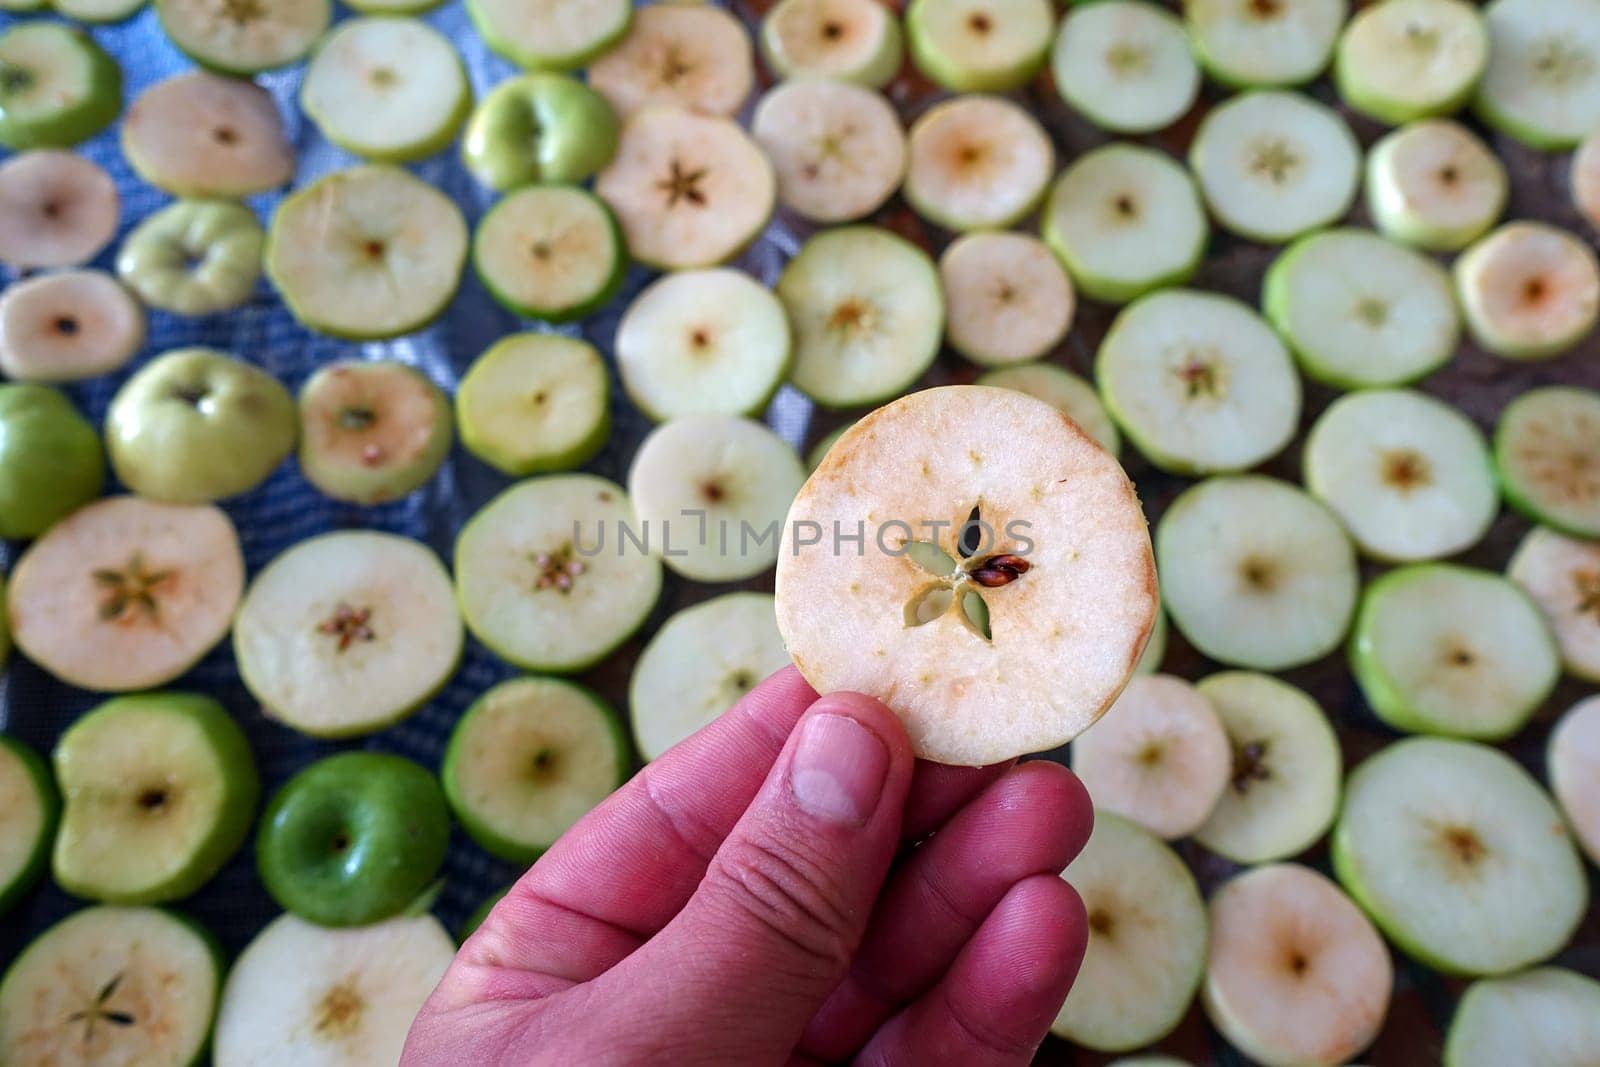 drying homemade apples, drying apples, sliced apple slices left to dry,